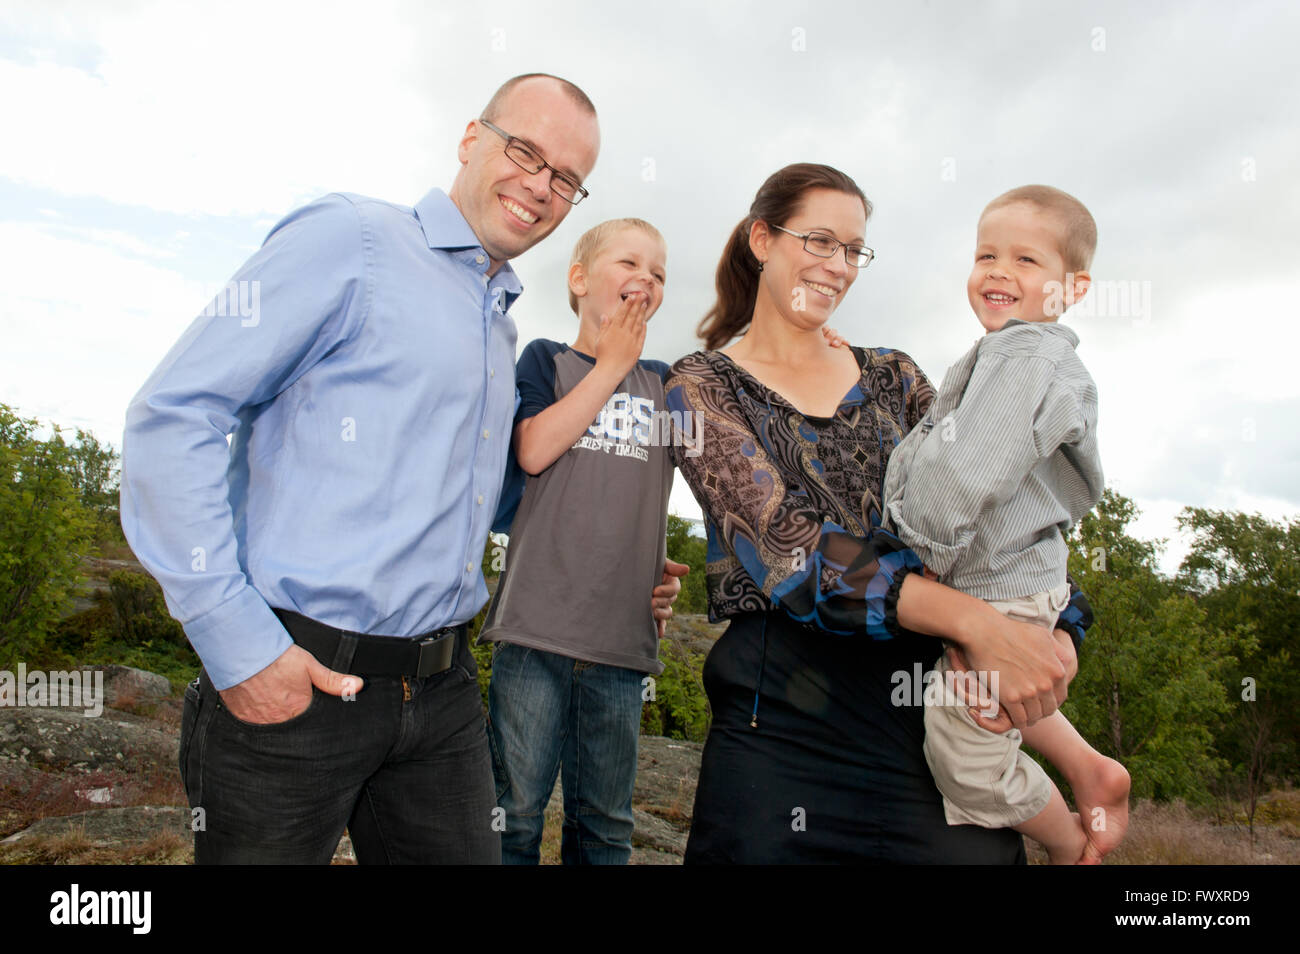 Sweden, Vastra Gotaland, Torslanda, Portrait of family with two children (4-5) Stock Photo